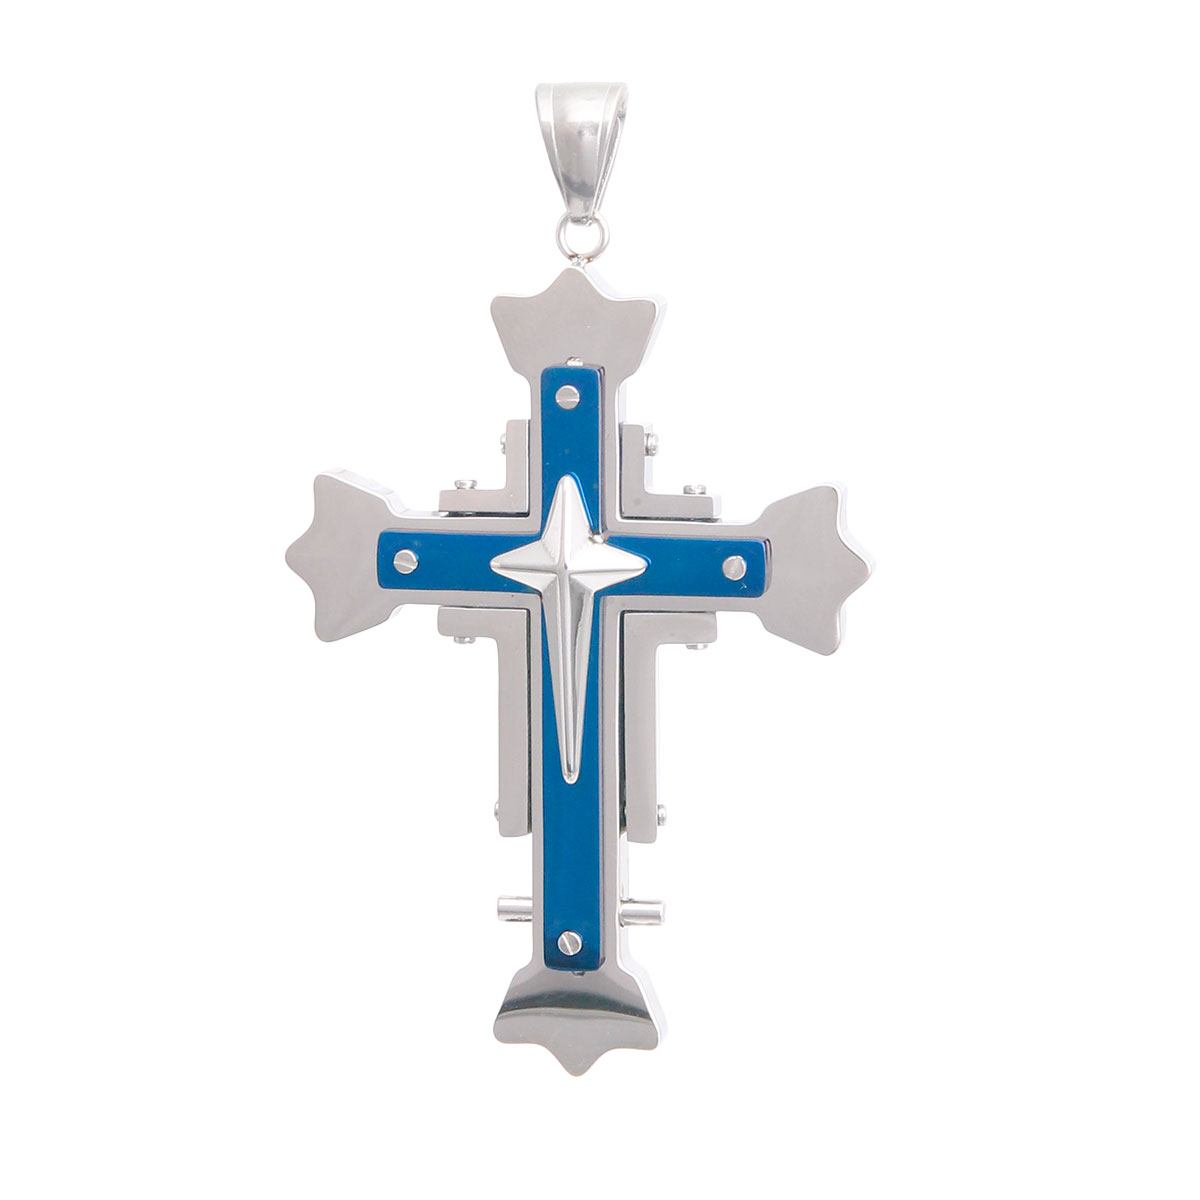 Silver Stainless Steel Cross Pendant